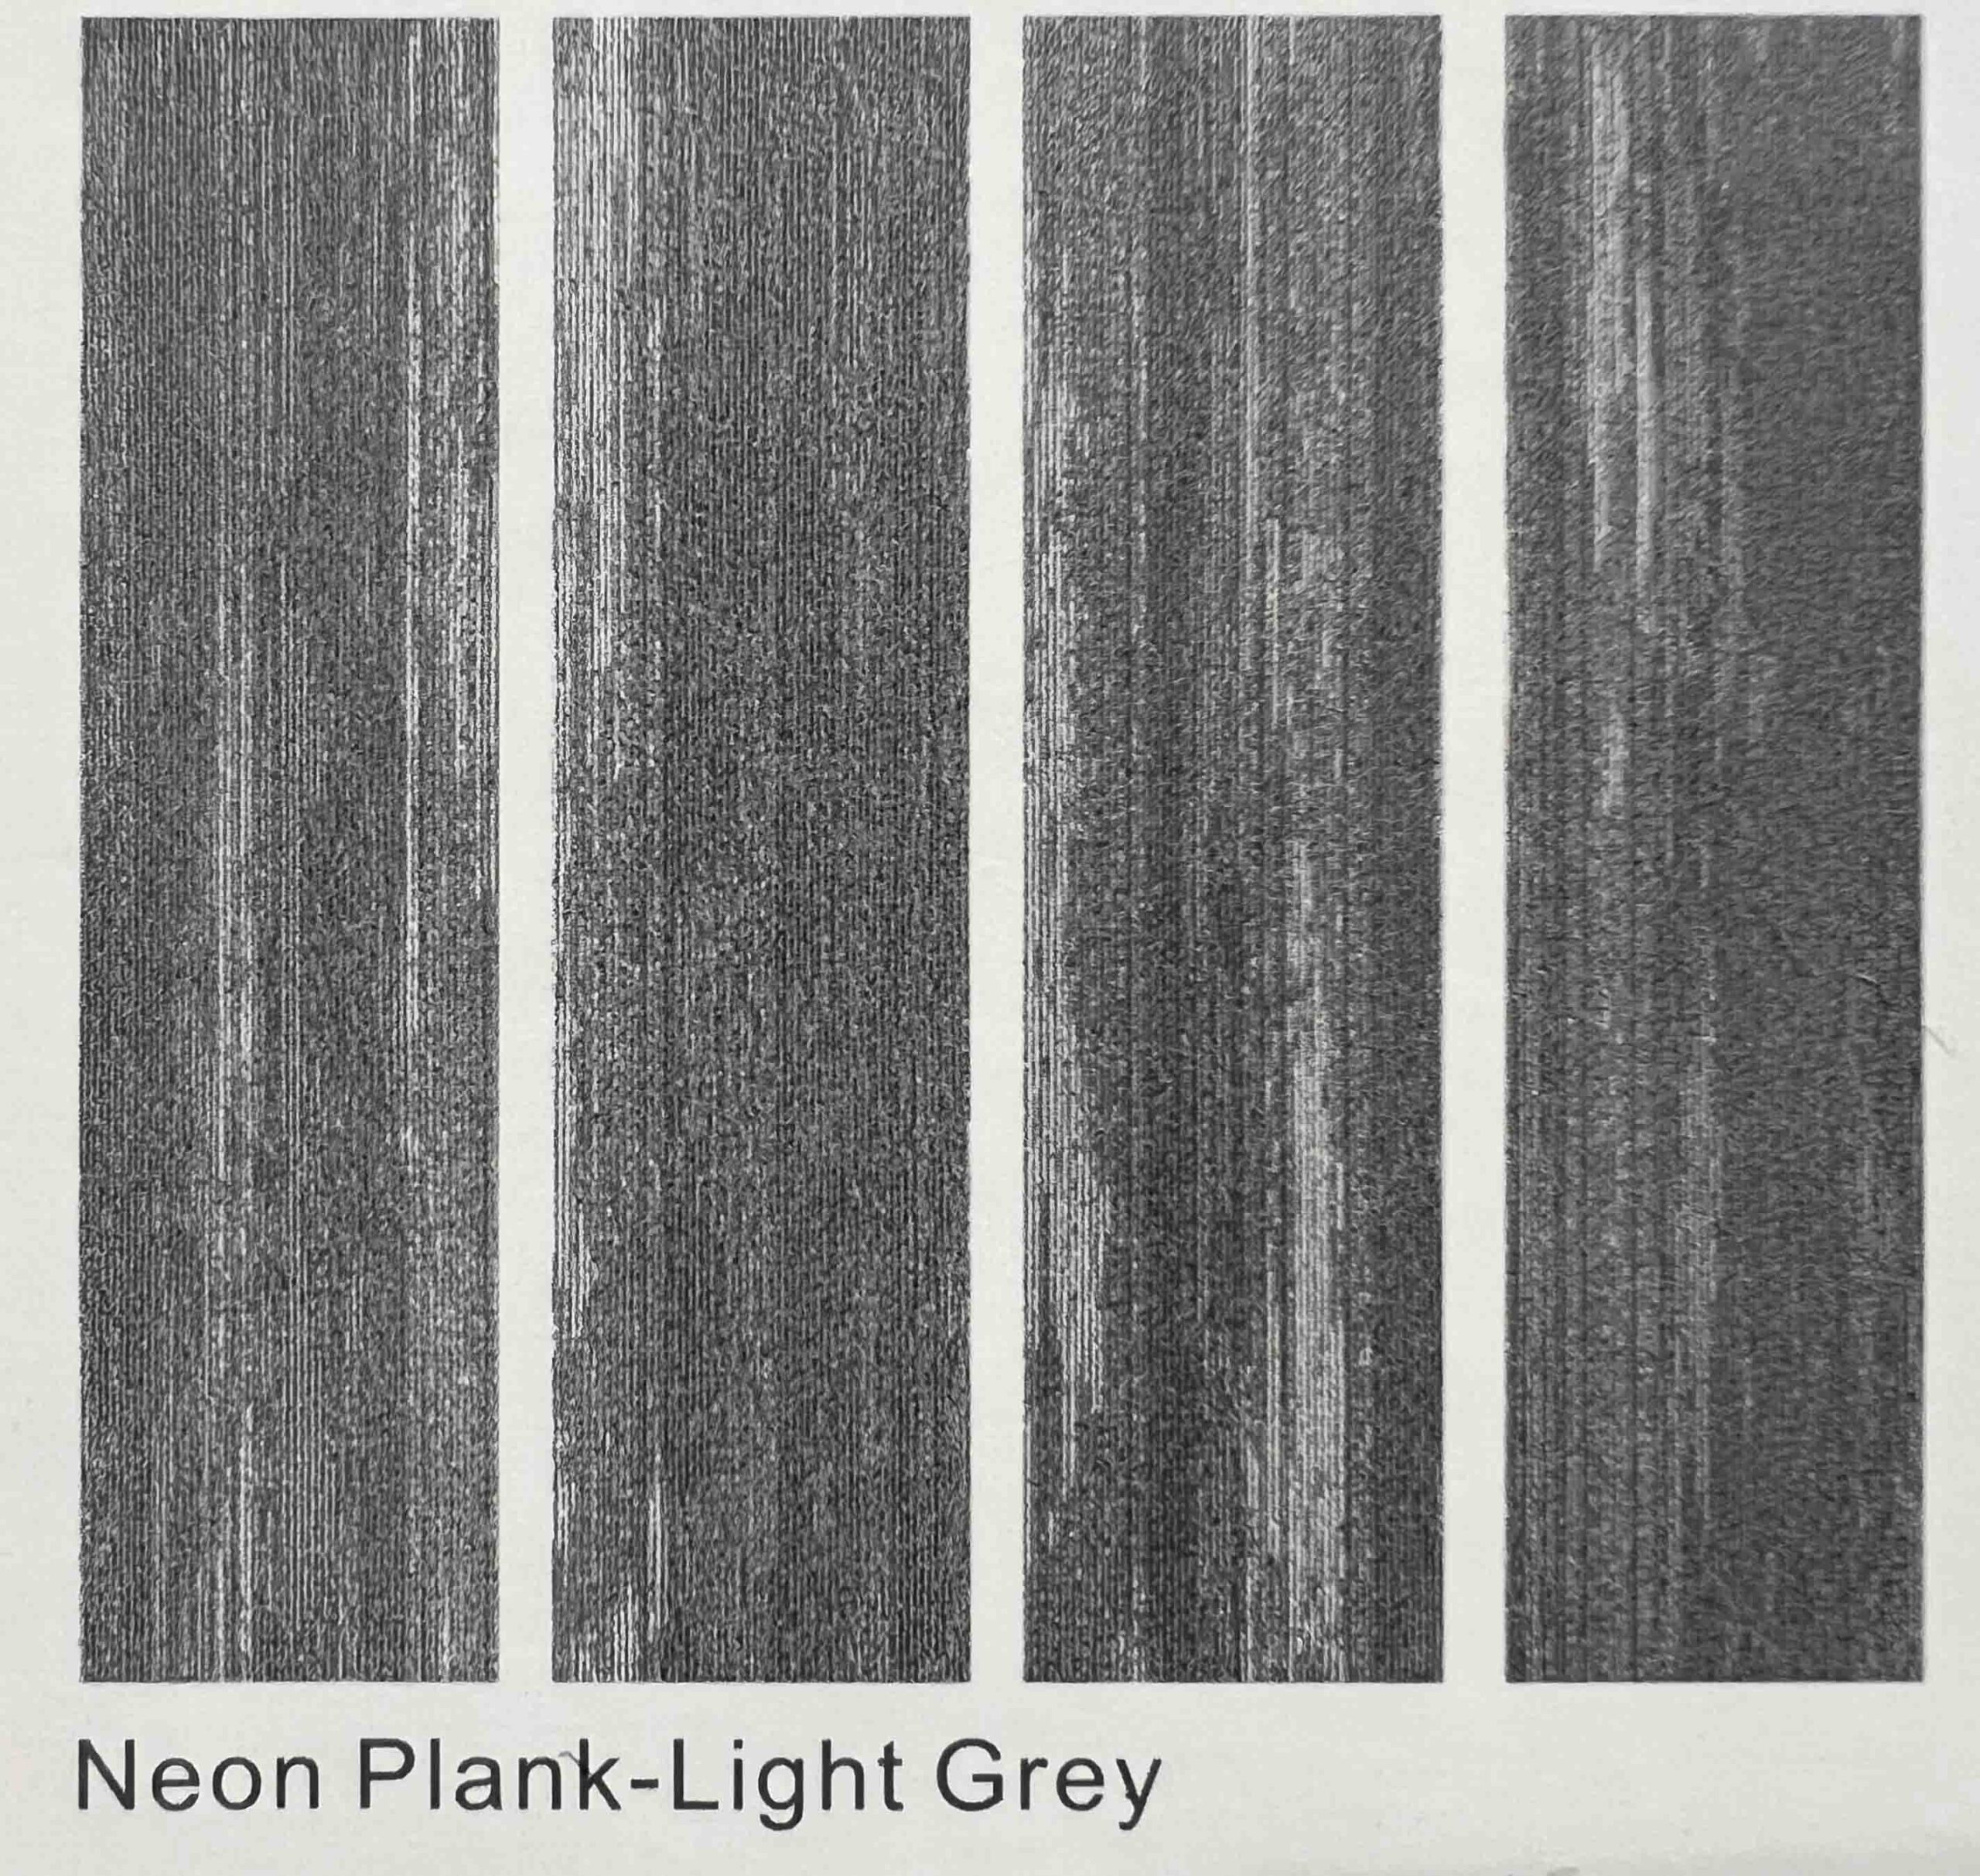 NEON PLANK-LIGHT GREY